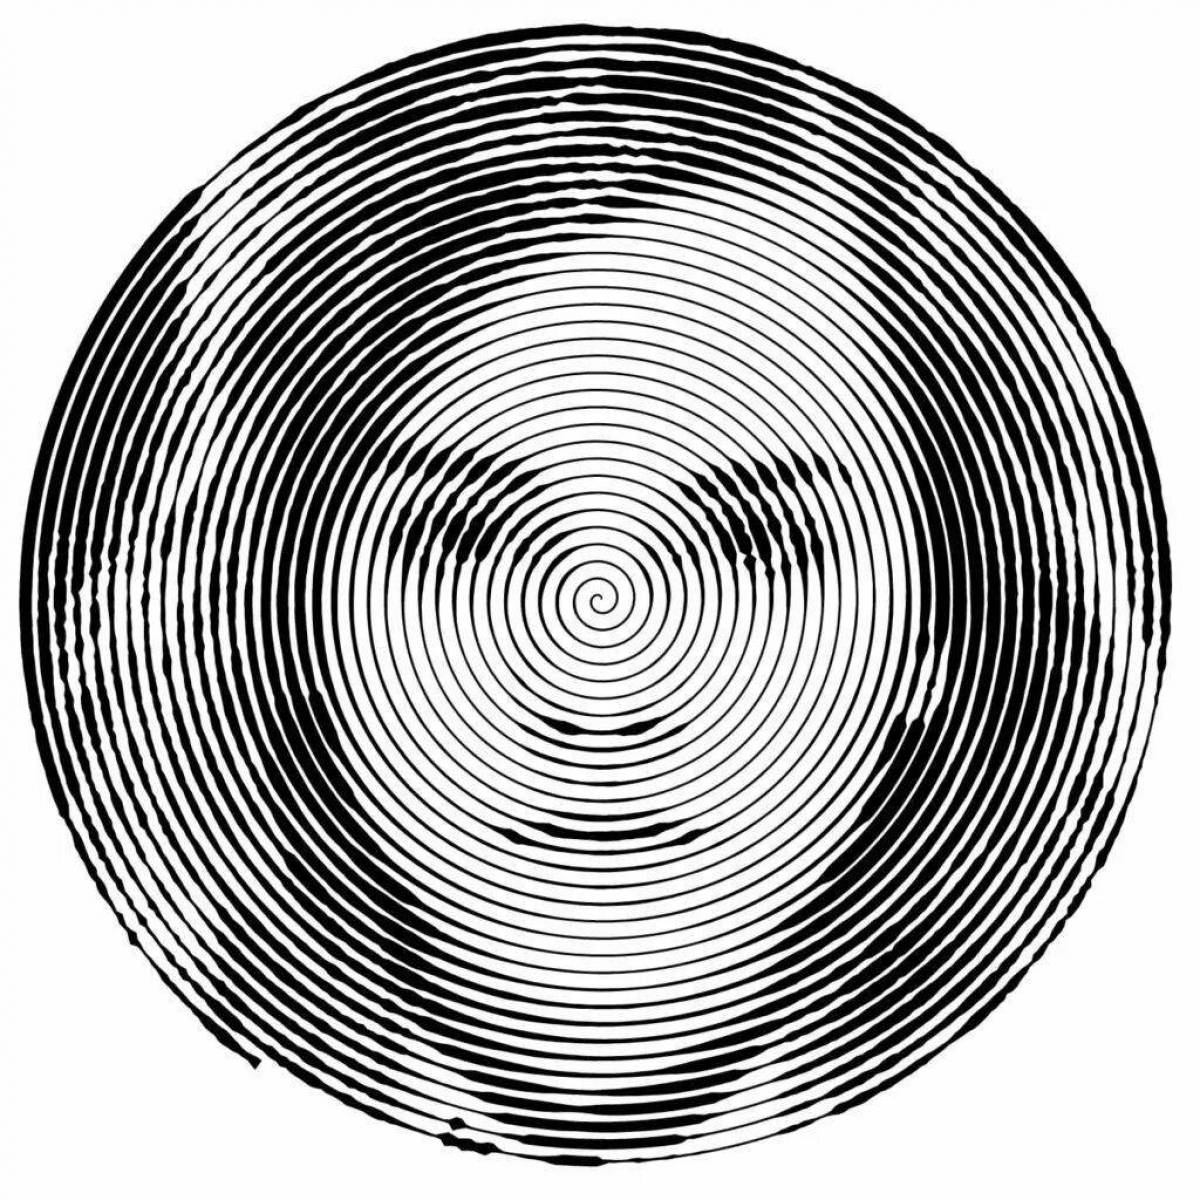 Coloring complex circular spiral